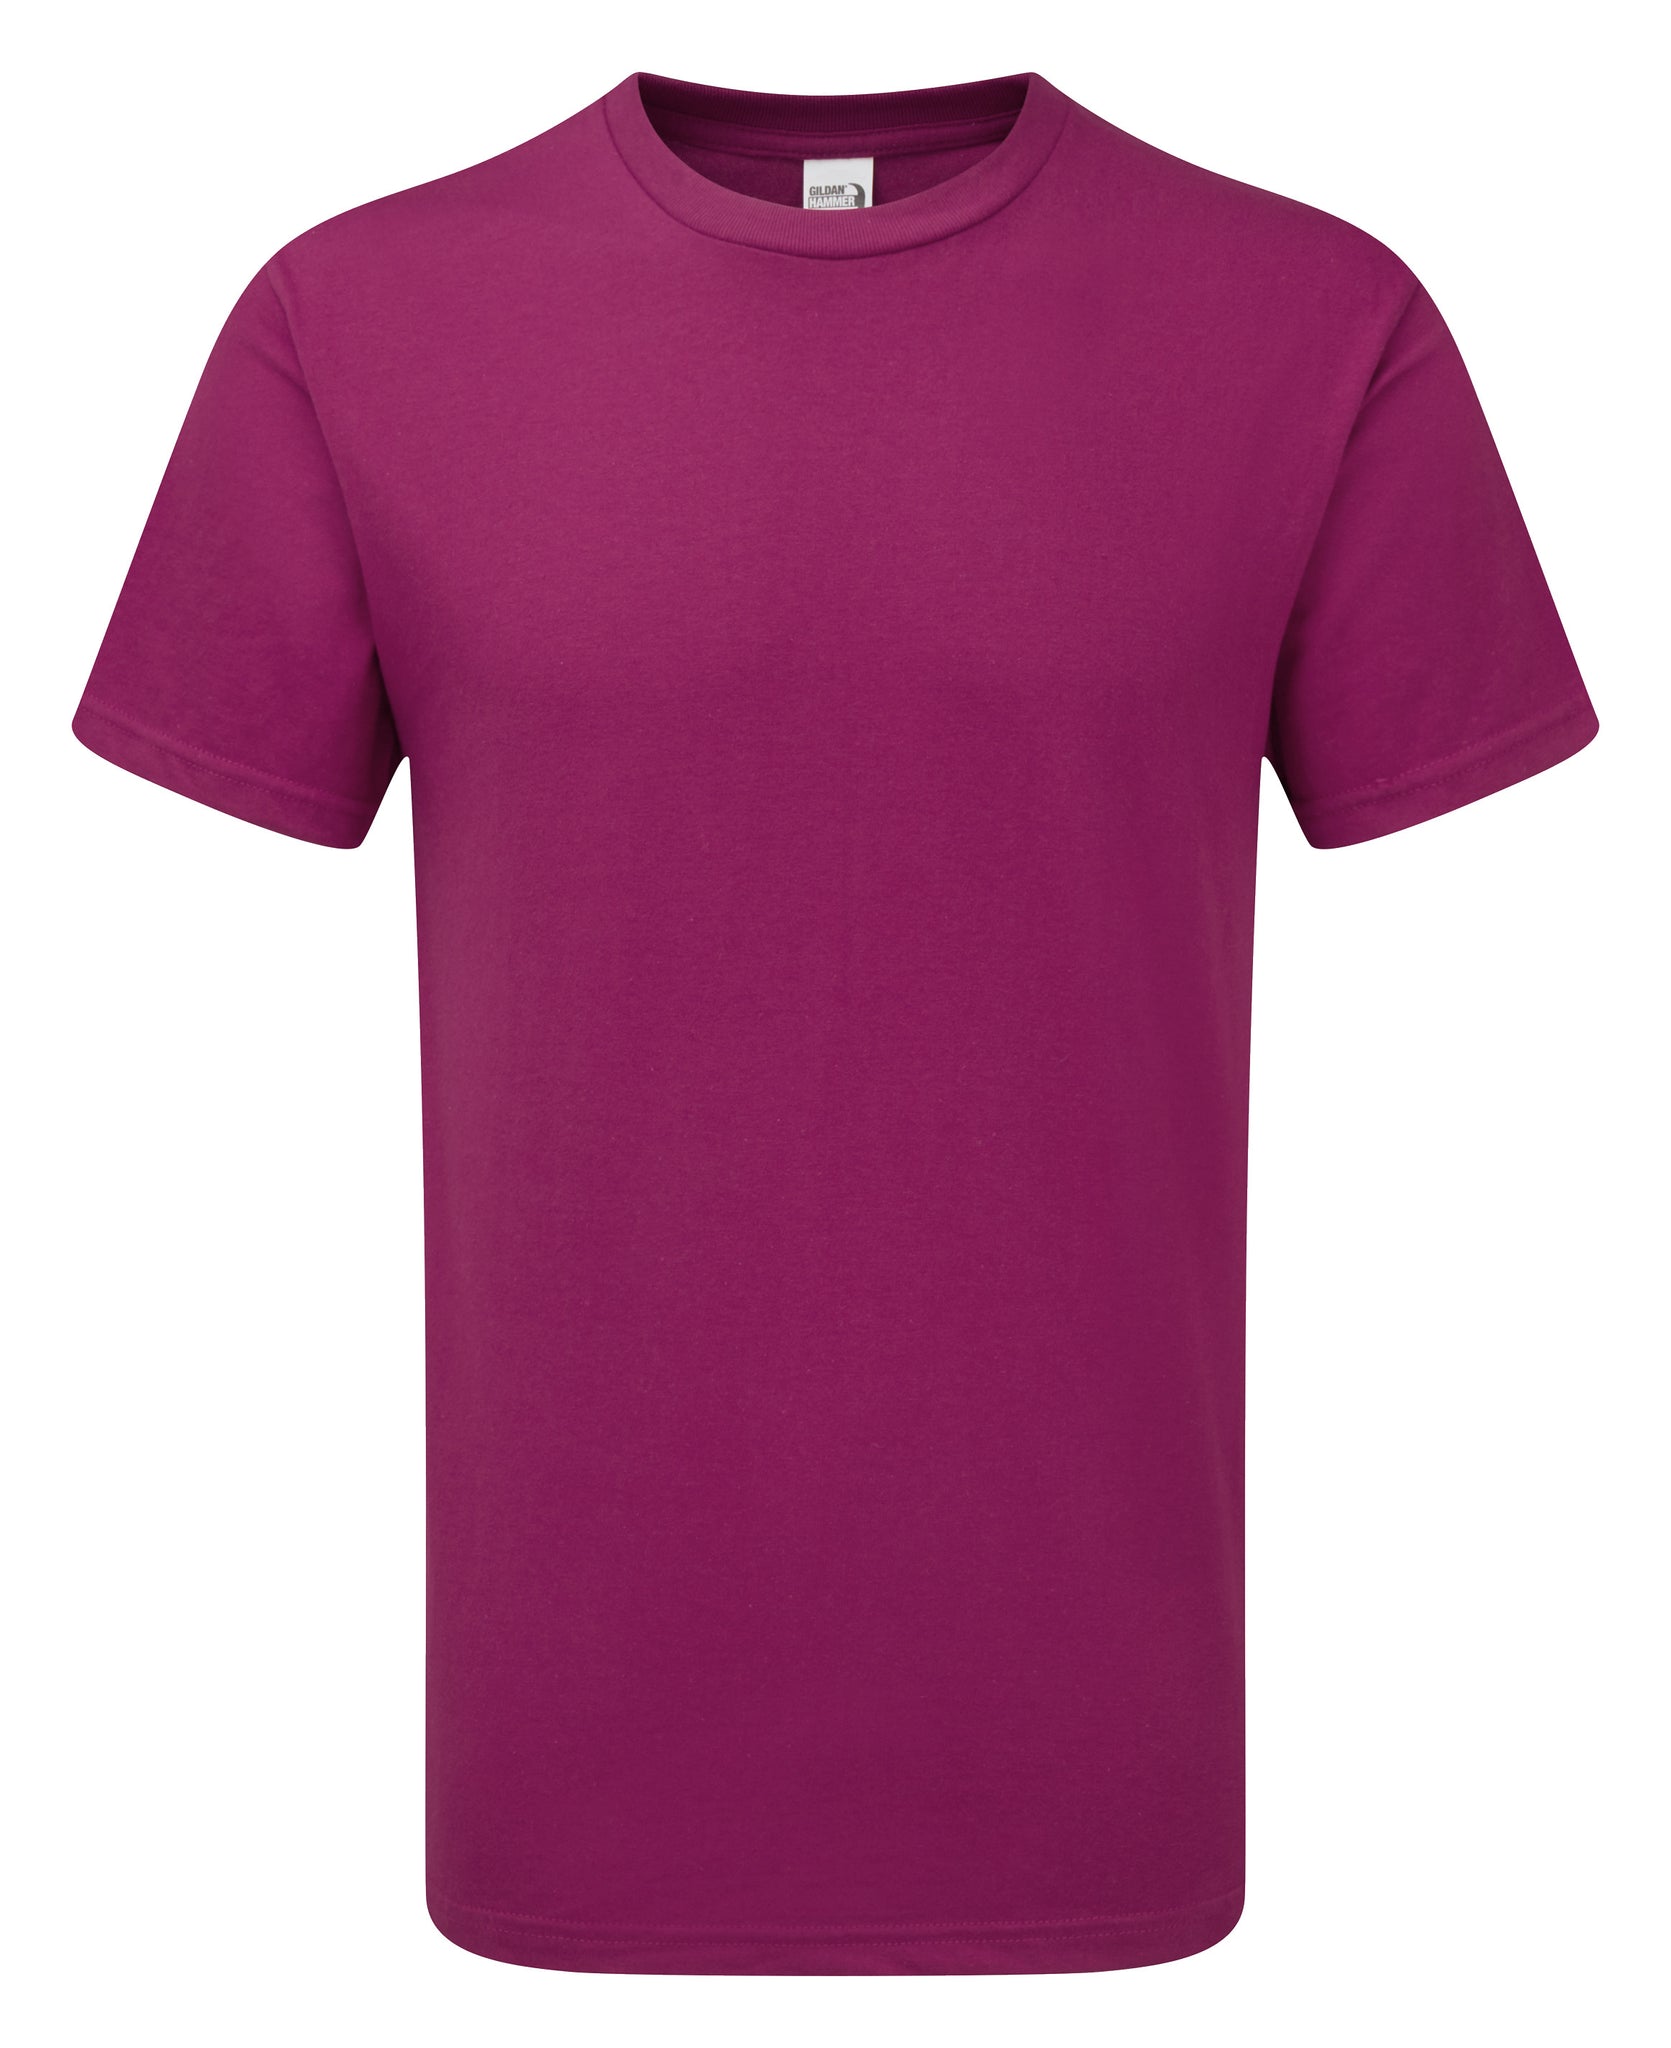 XL Berry Cotton T Shirt - choose logo